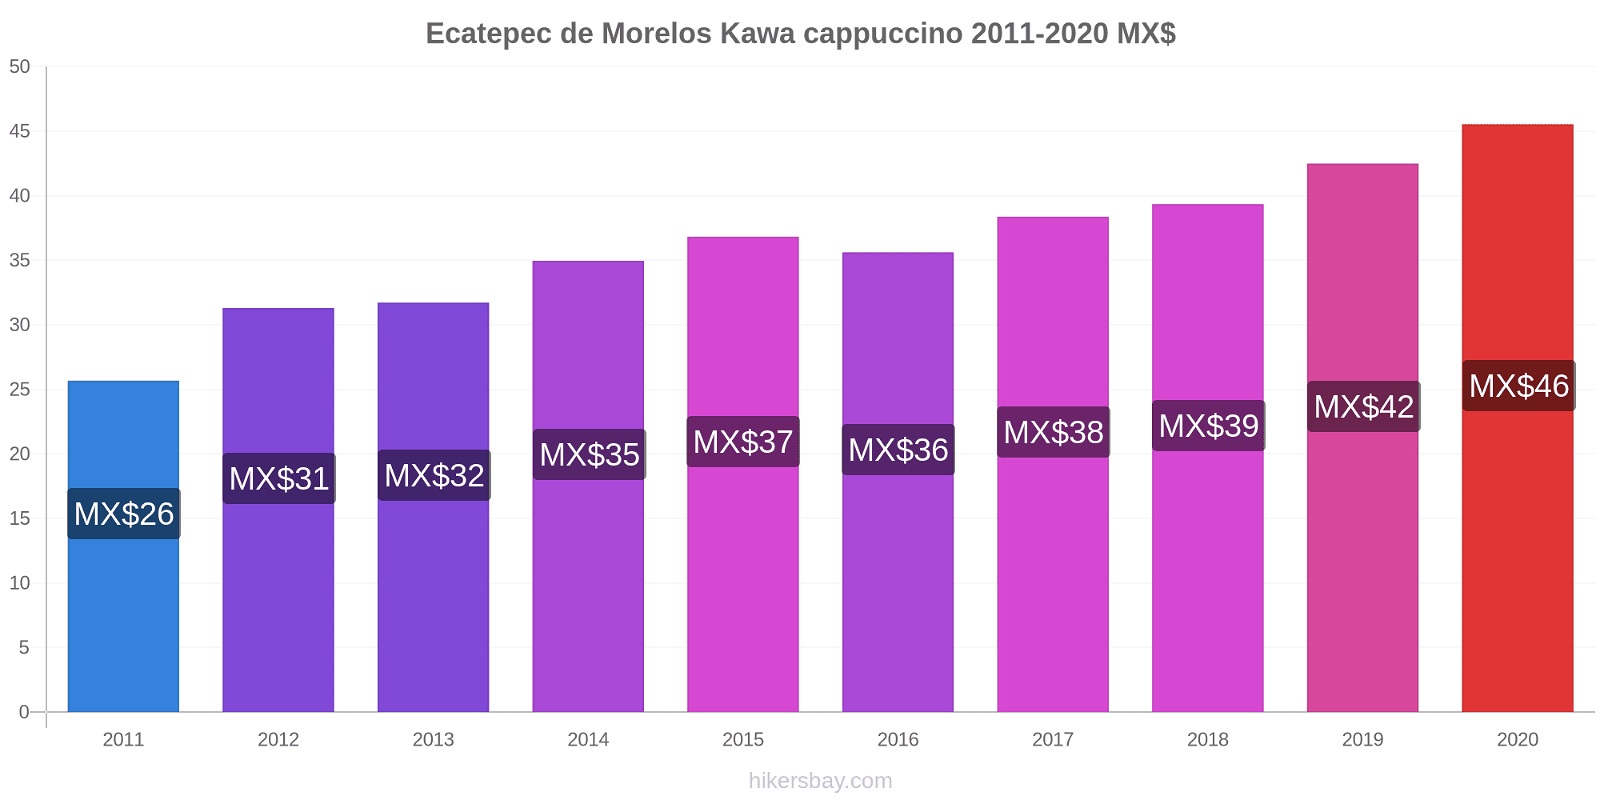 Ecatepec de Morelos zmiany cen Kawa cappuccino hikersbay.com